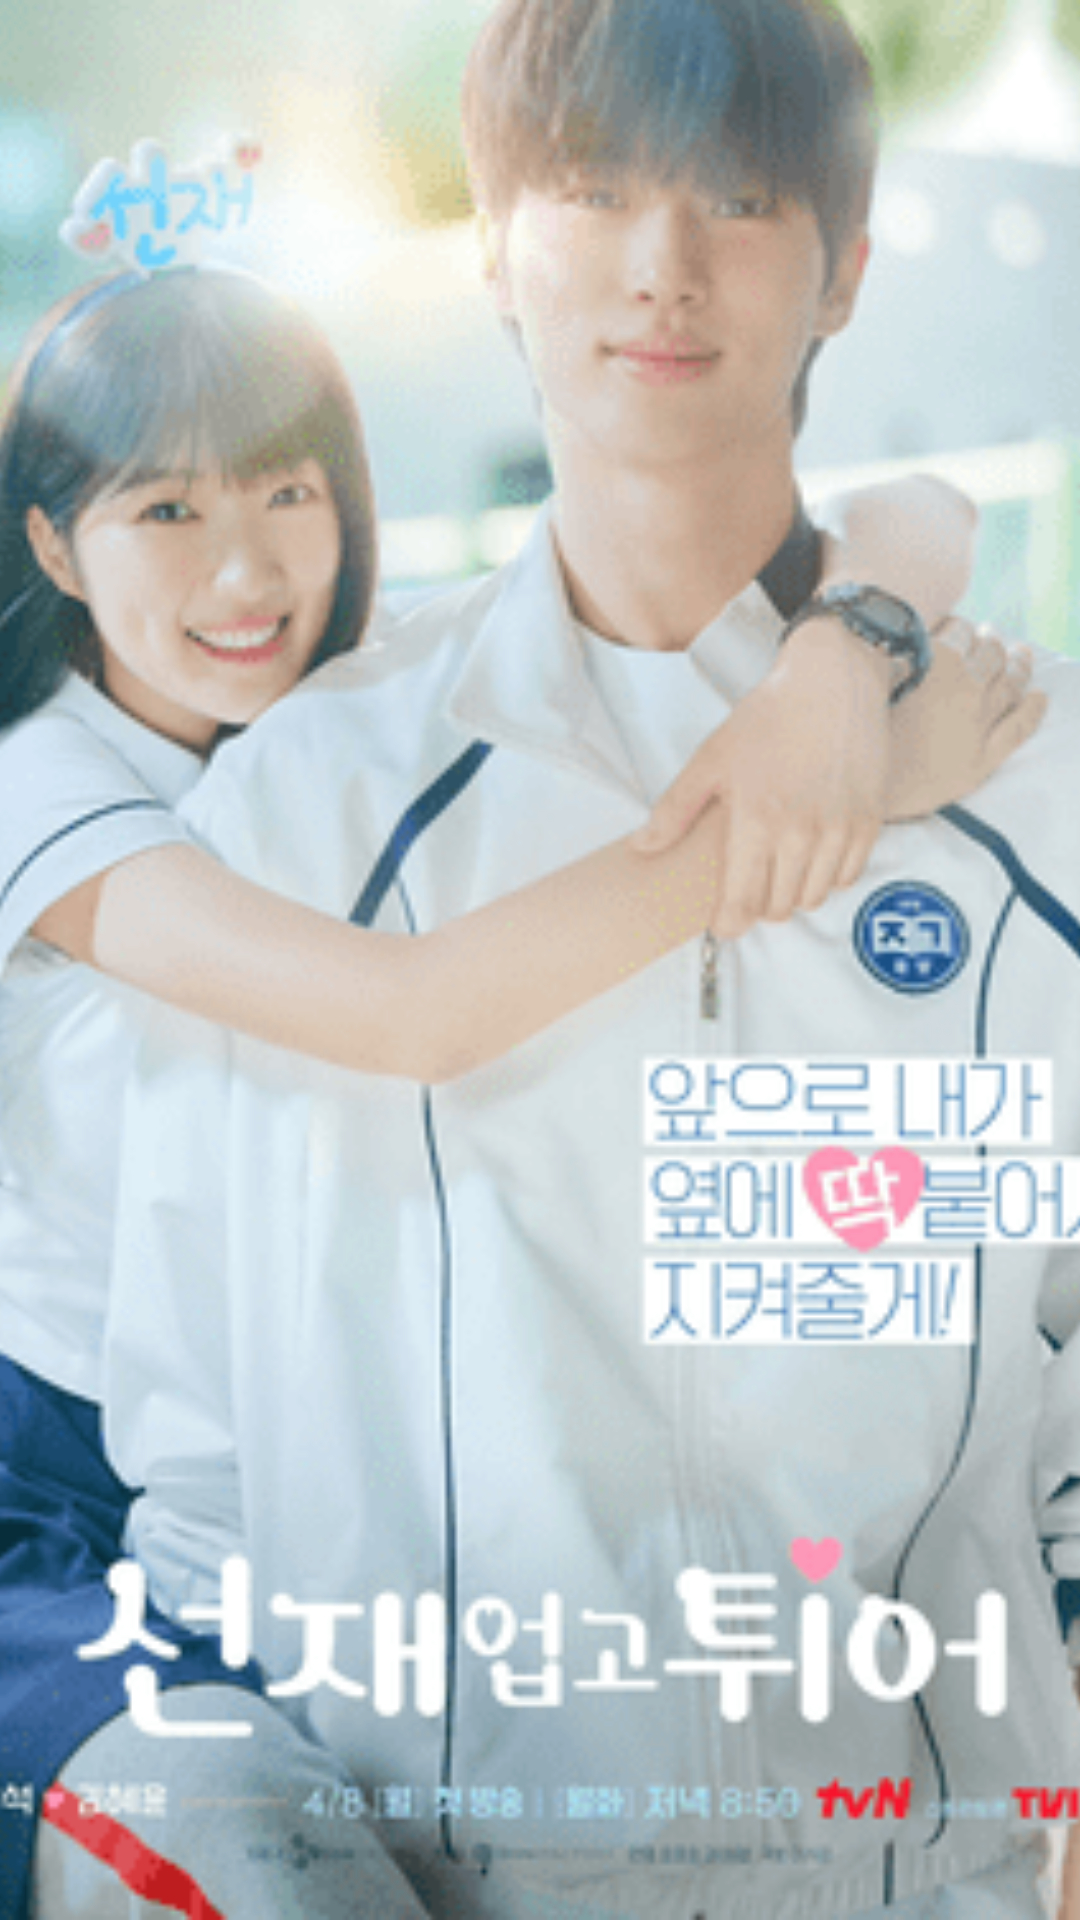 5 Must-watch K-dramas similar to Lovely Runner